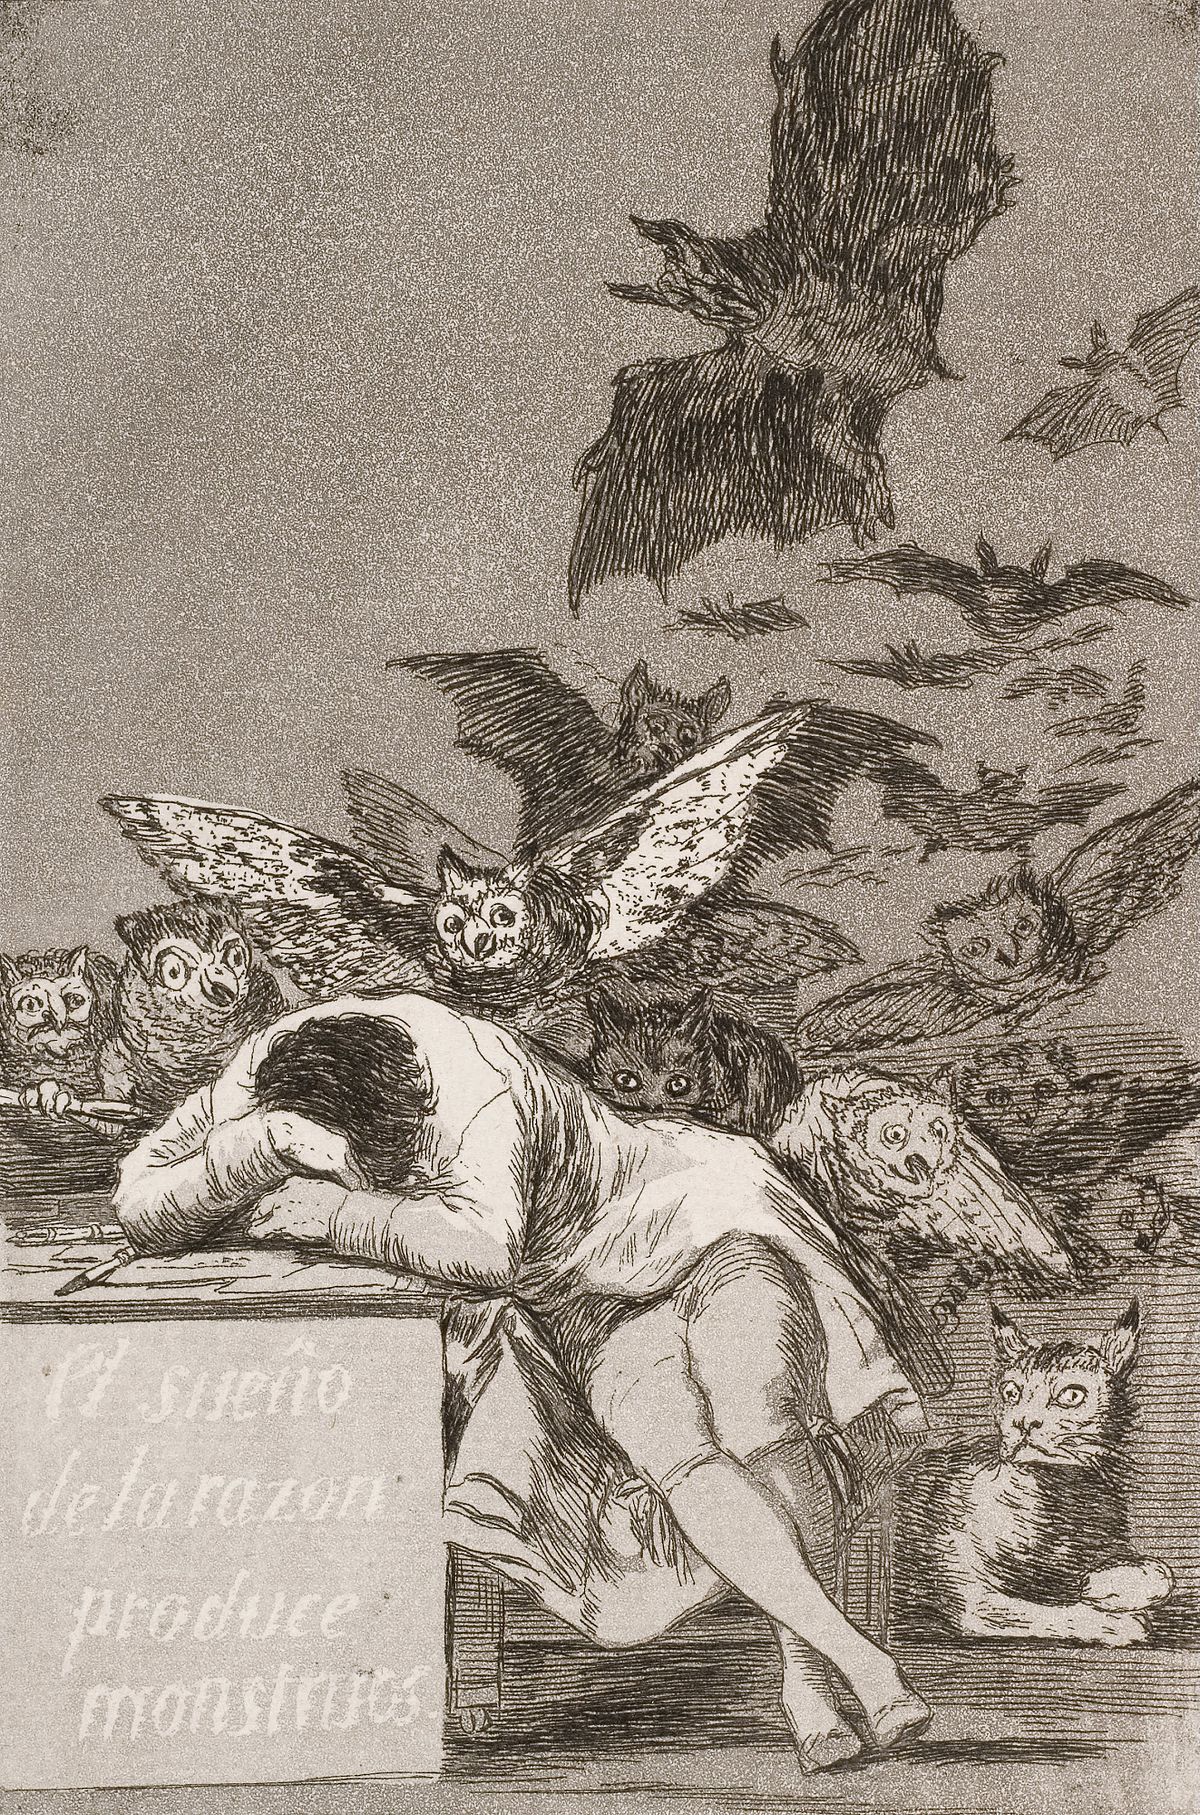 Сон разума рождает монстров by Francisco Goya - 1799 - 21.6 x 15.2 см 